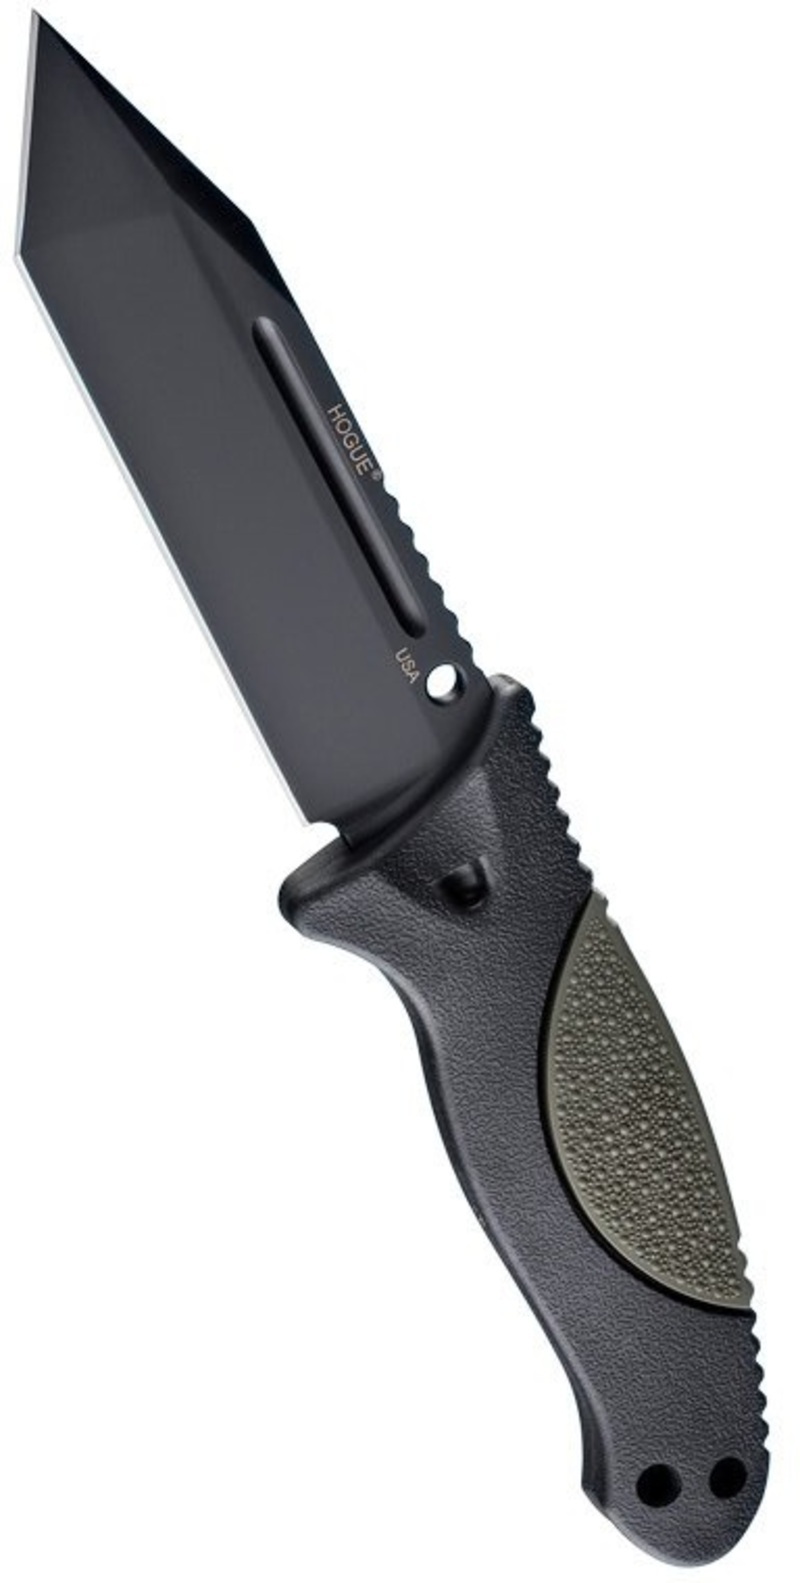 Нож с фиксированным клинком EX-F02 Black Tanto Blade, OD Green Handle 11.4 см. нож с фиксированным клинком ontario ns 9   canvas micarta handle